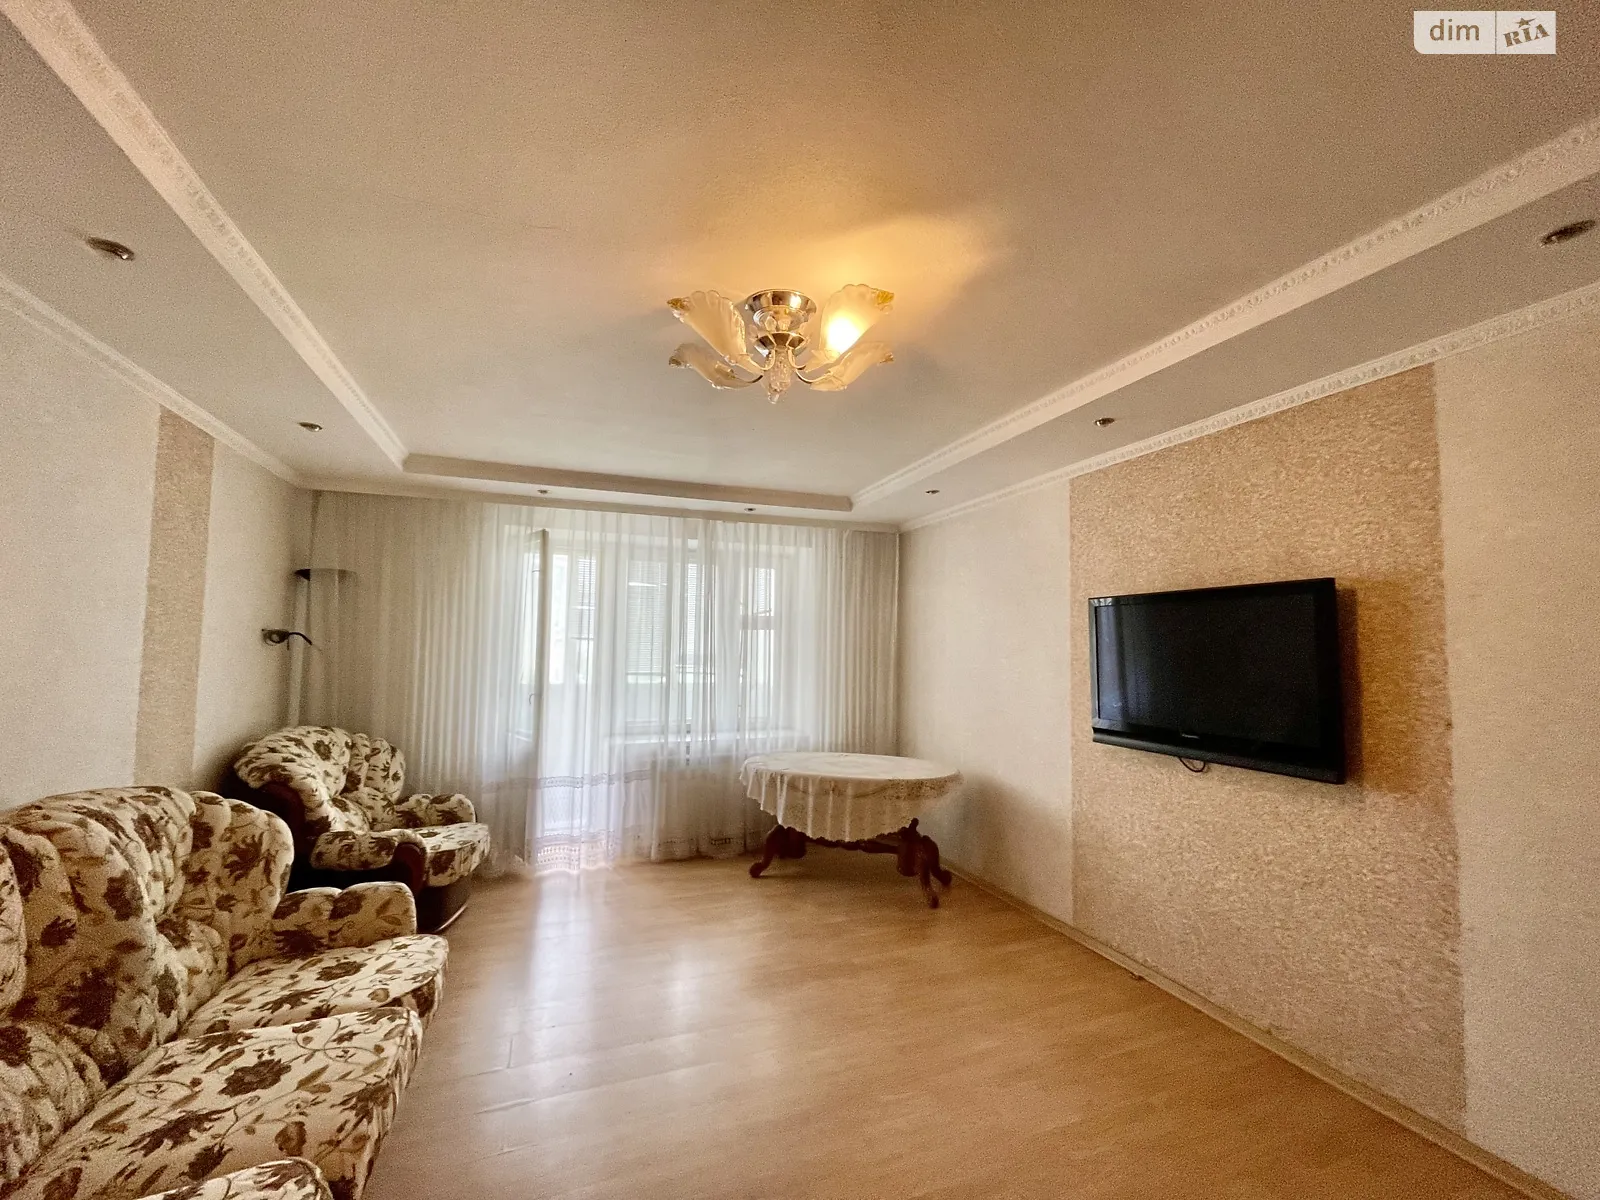 3-комнатная квартира 86 кв. м в Тернополе, ул. Киевская, 11А - фото 1